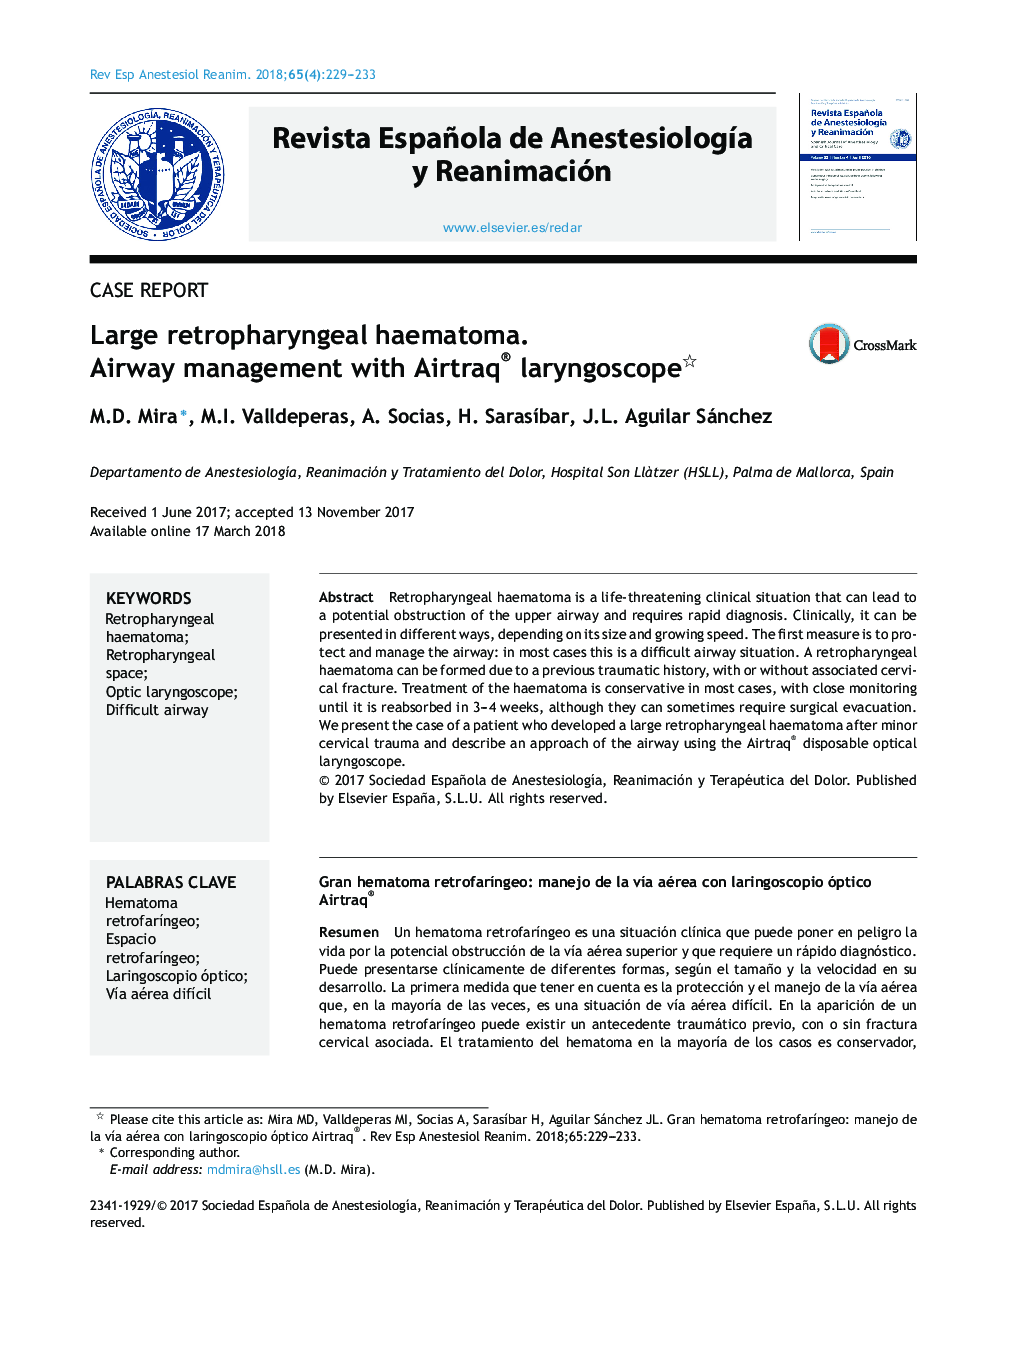 Large retropharyngeal haematoma. Airway management with Airtraq® laryngoscope